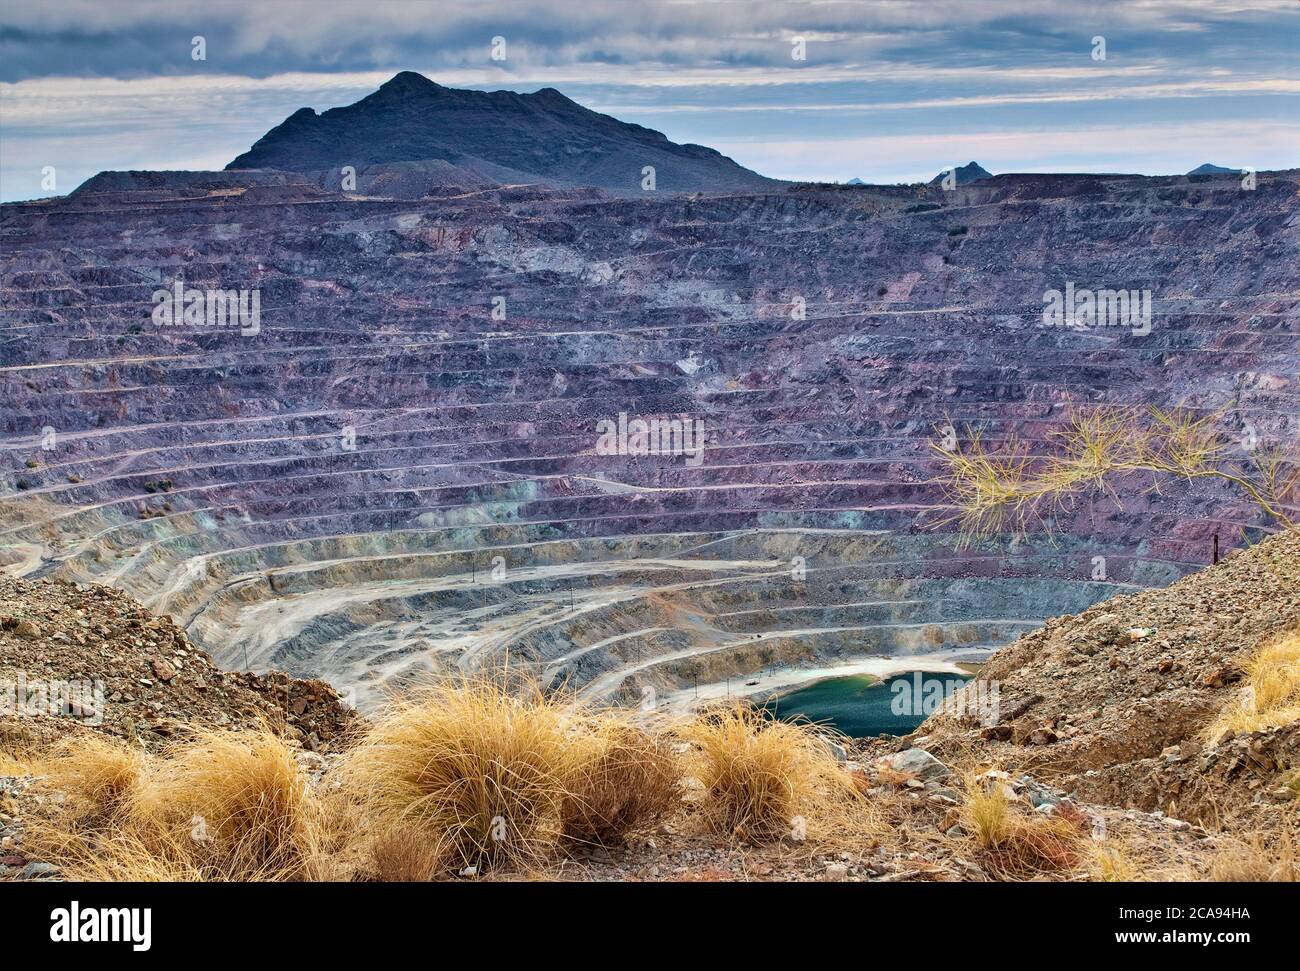 Phelps Dodge miniera di rame a cielo aperto, ora chiusa, ad Ajo, Arizona,  USA Foto stock - Alamy